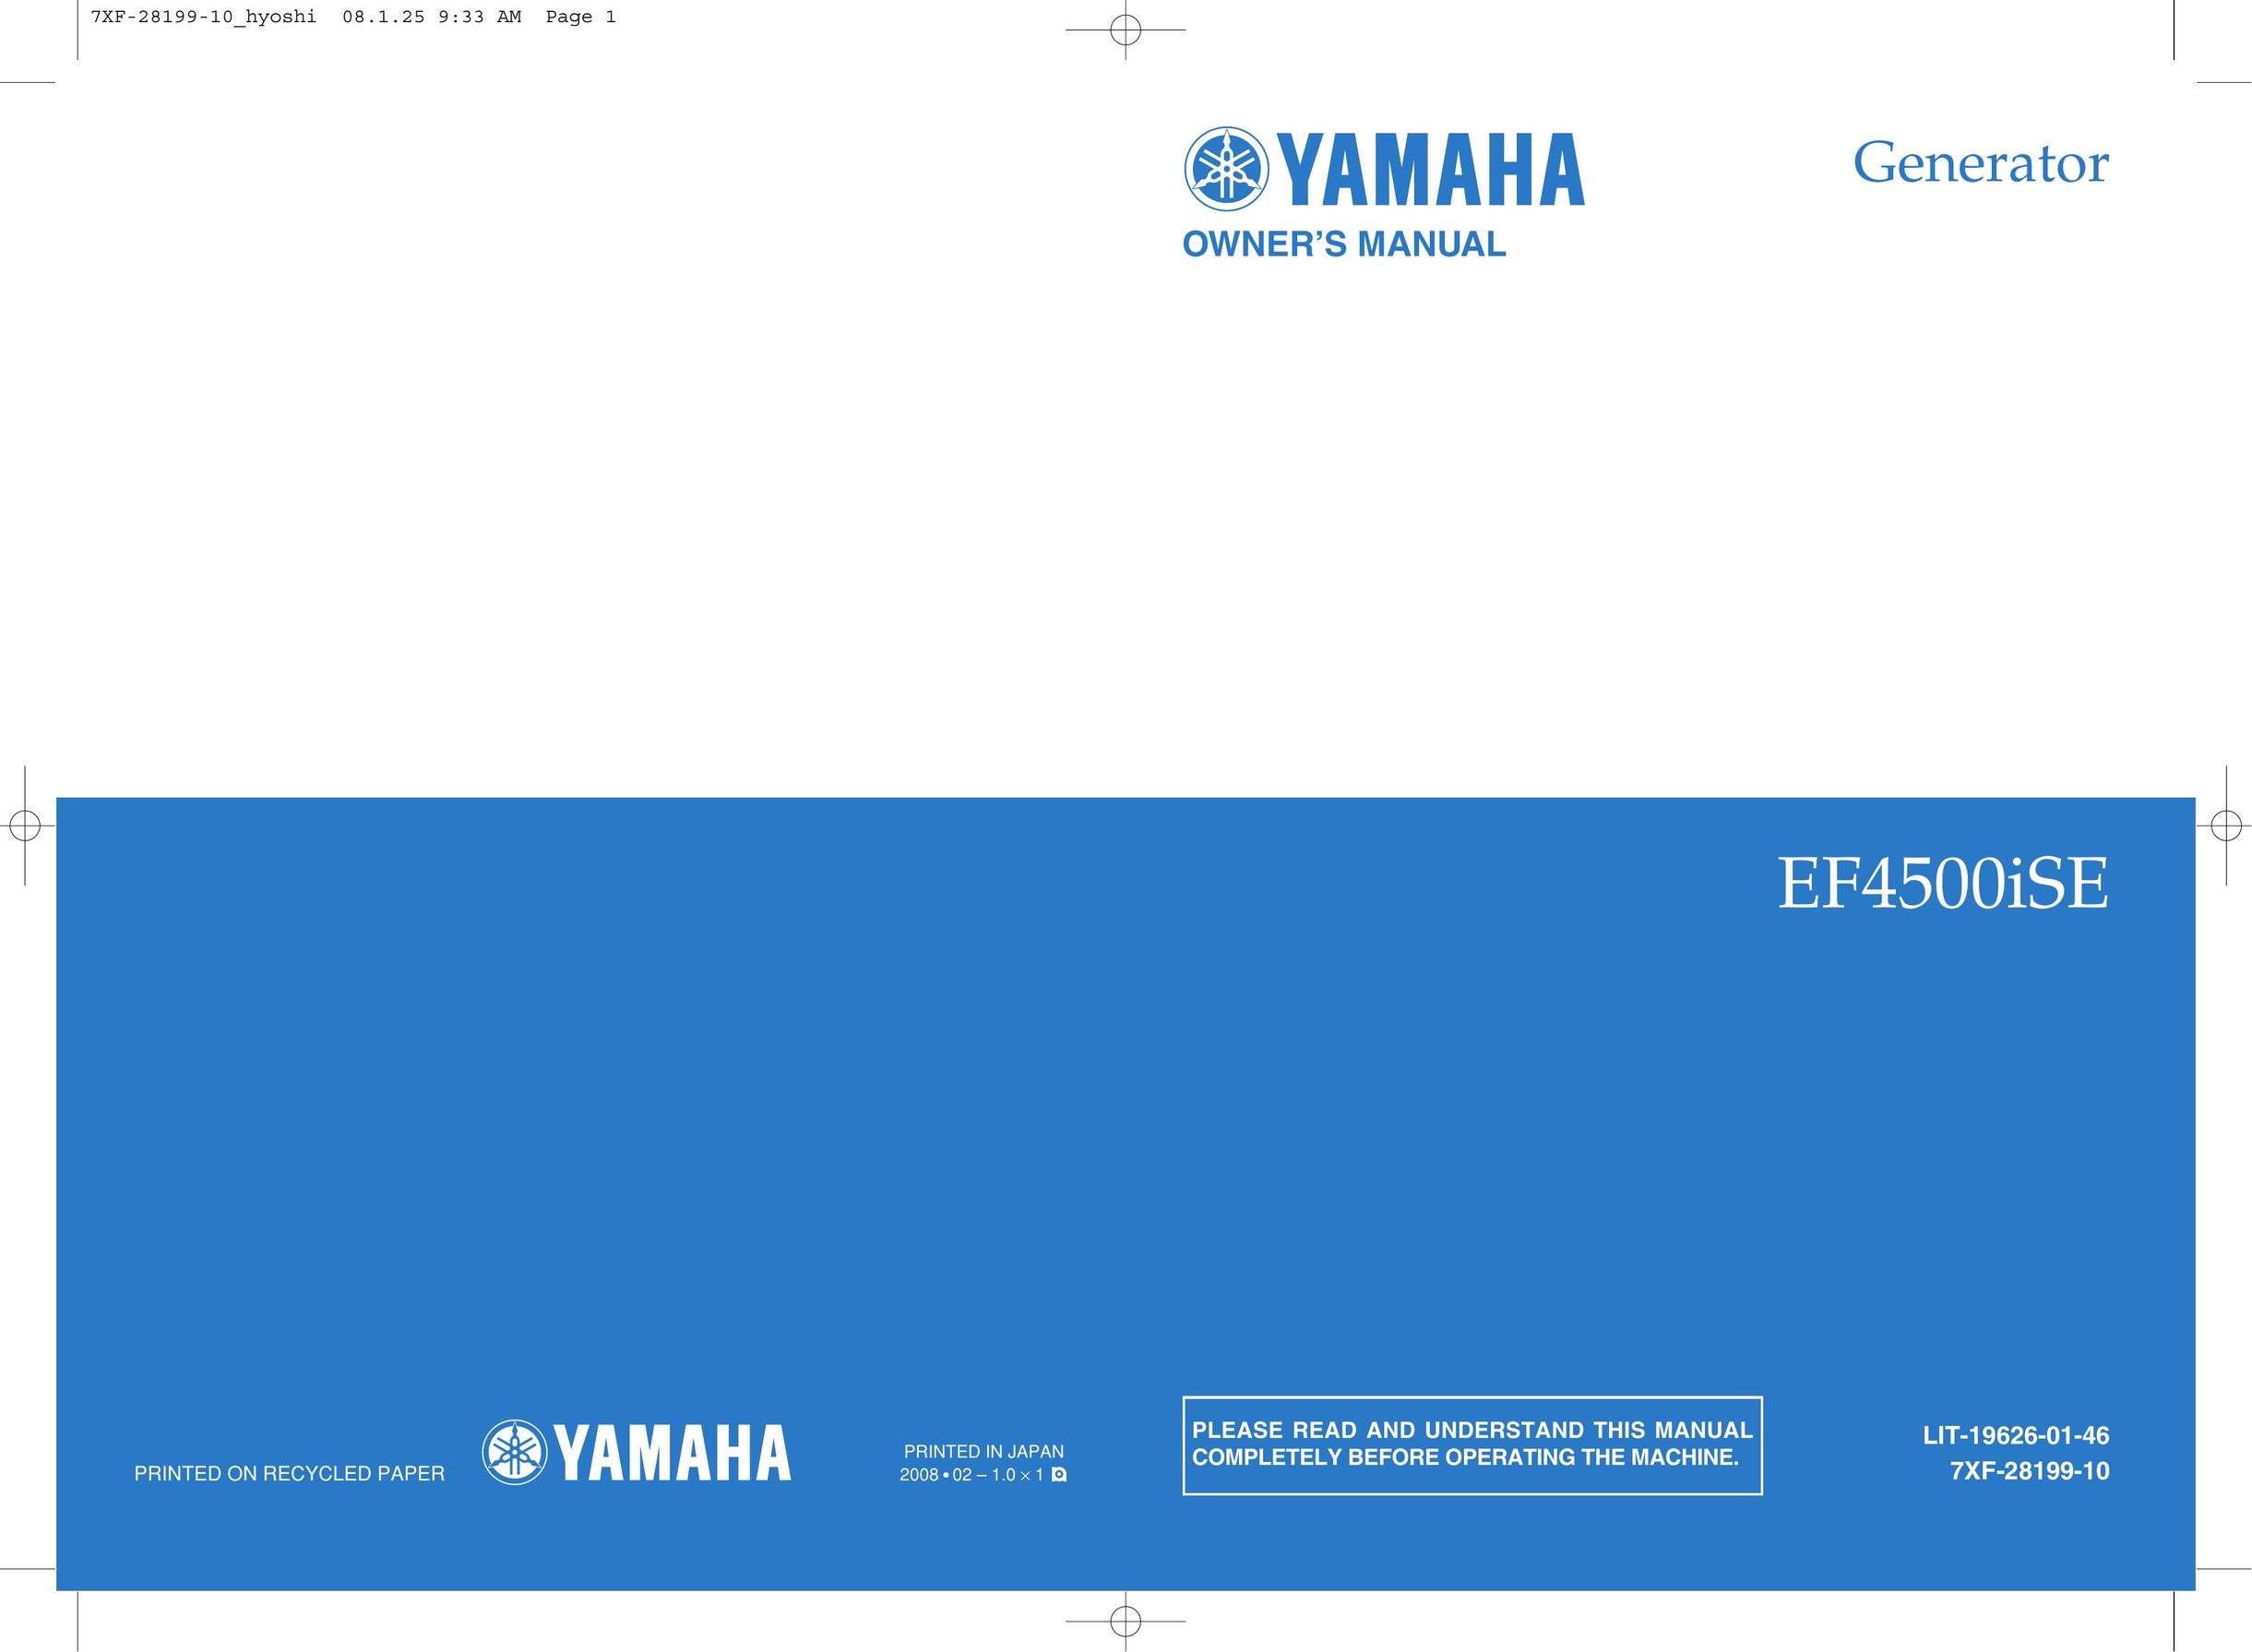 Yamaha EF4500iSE Welding System User Manual